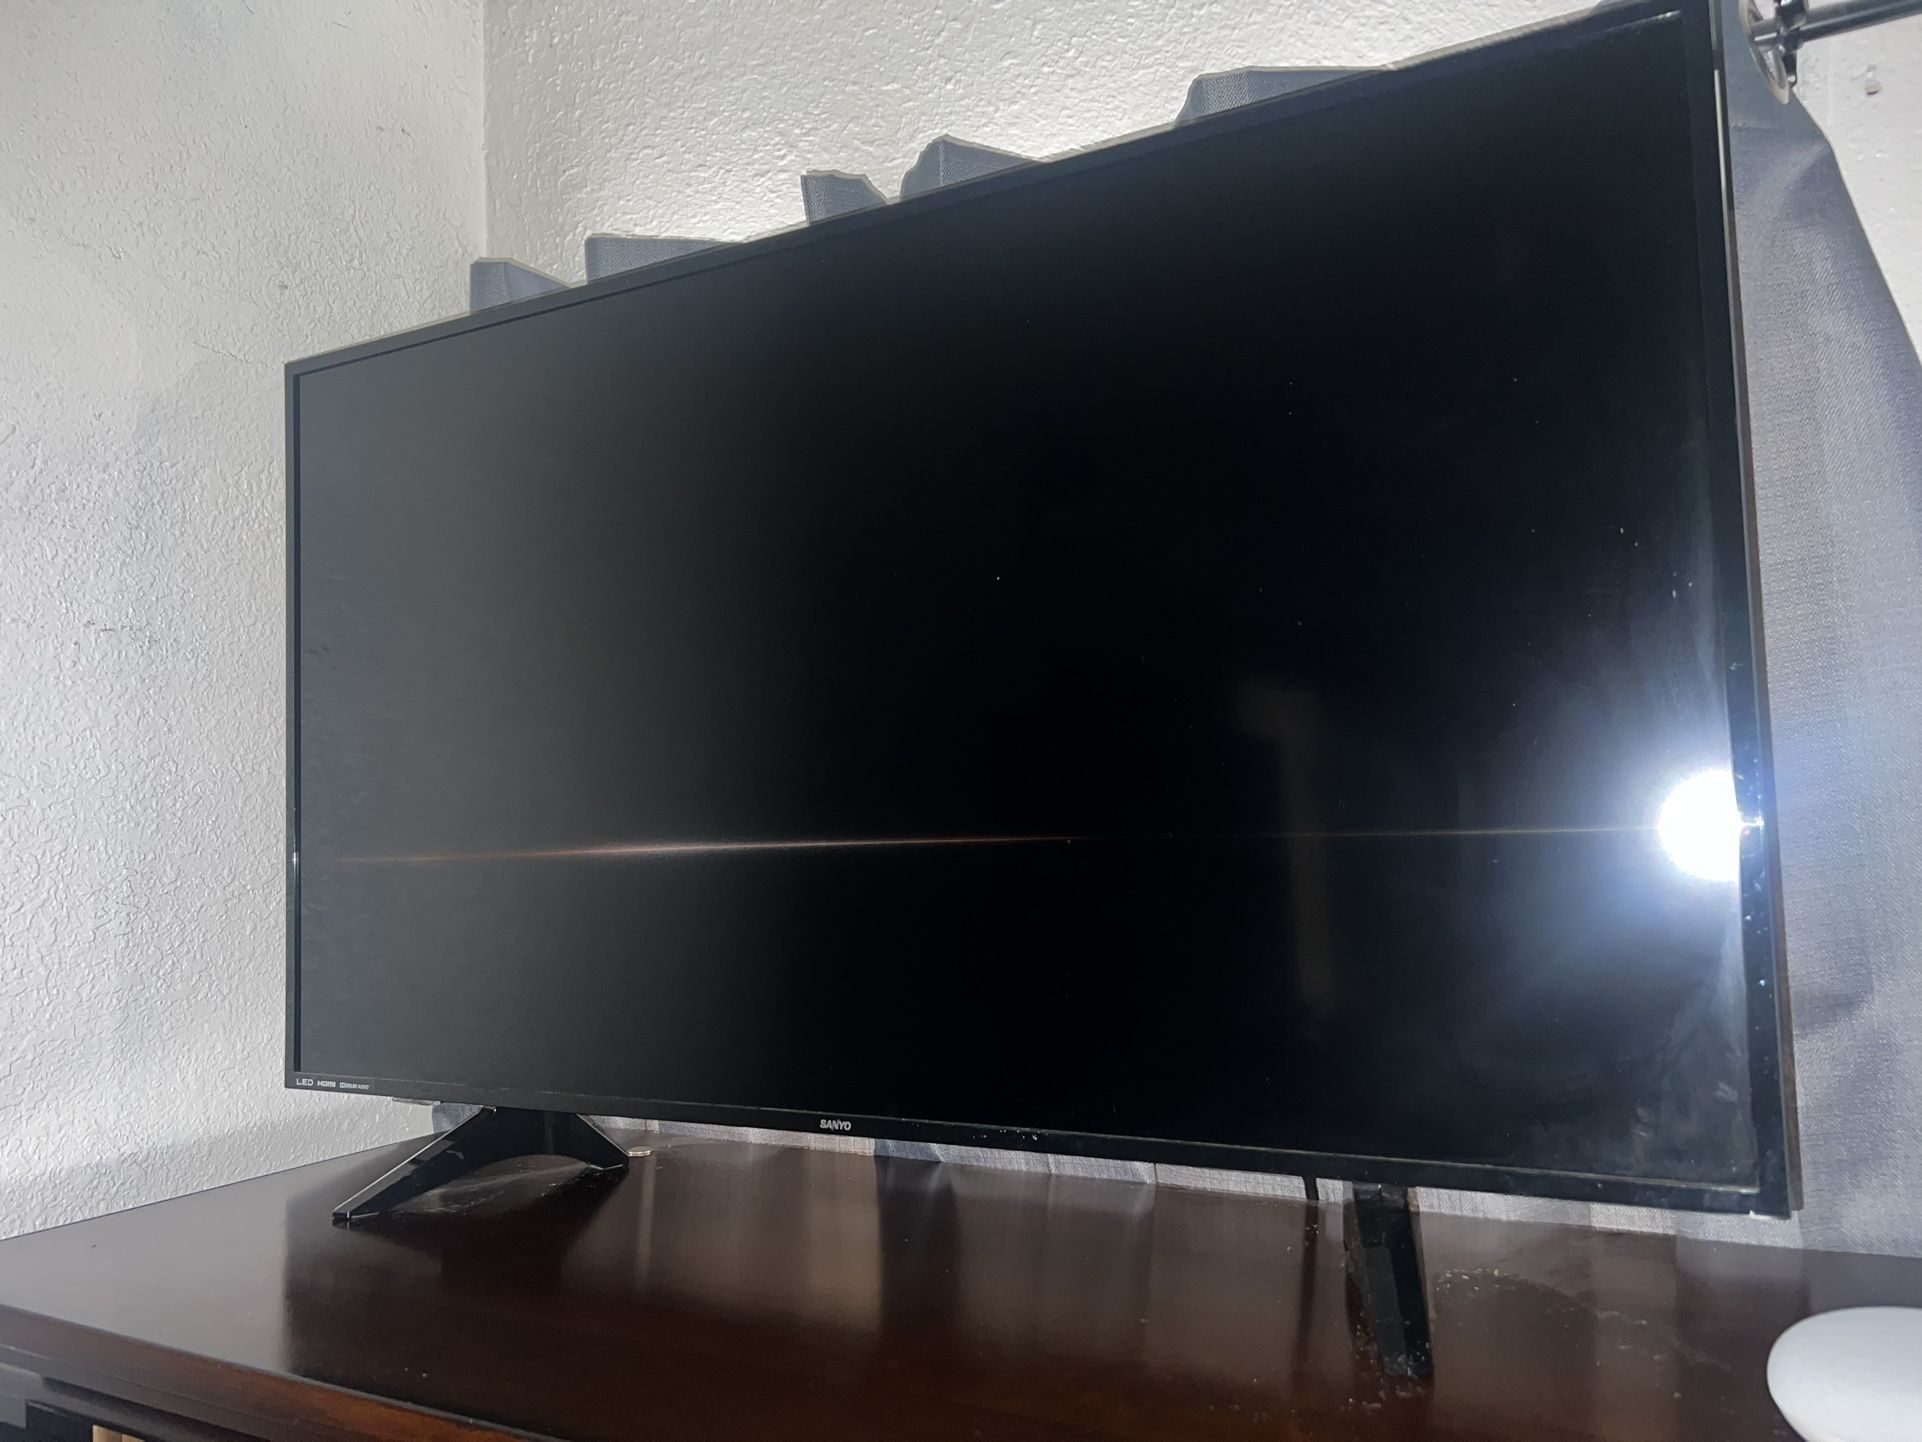 40” inch TV